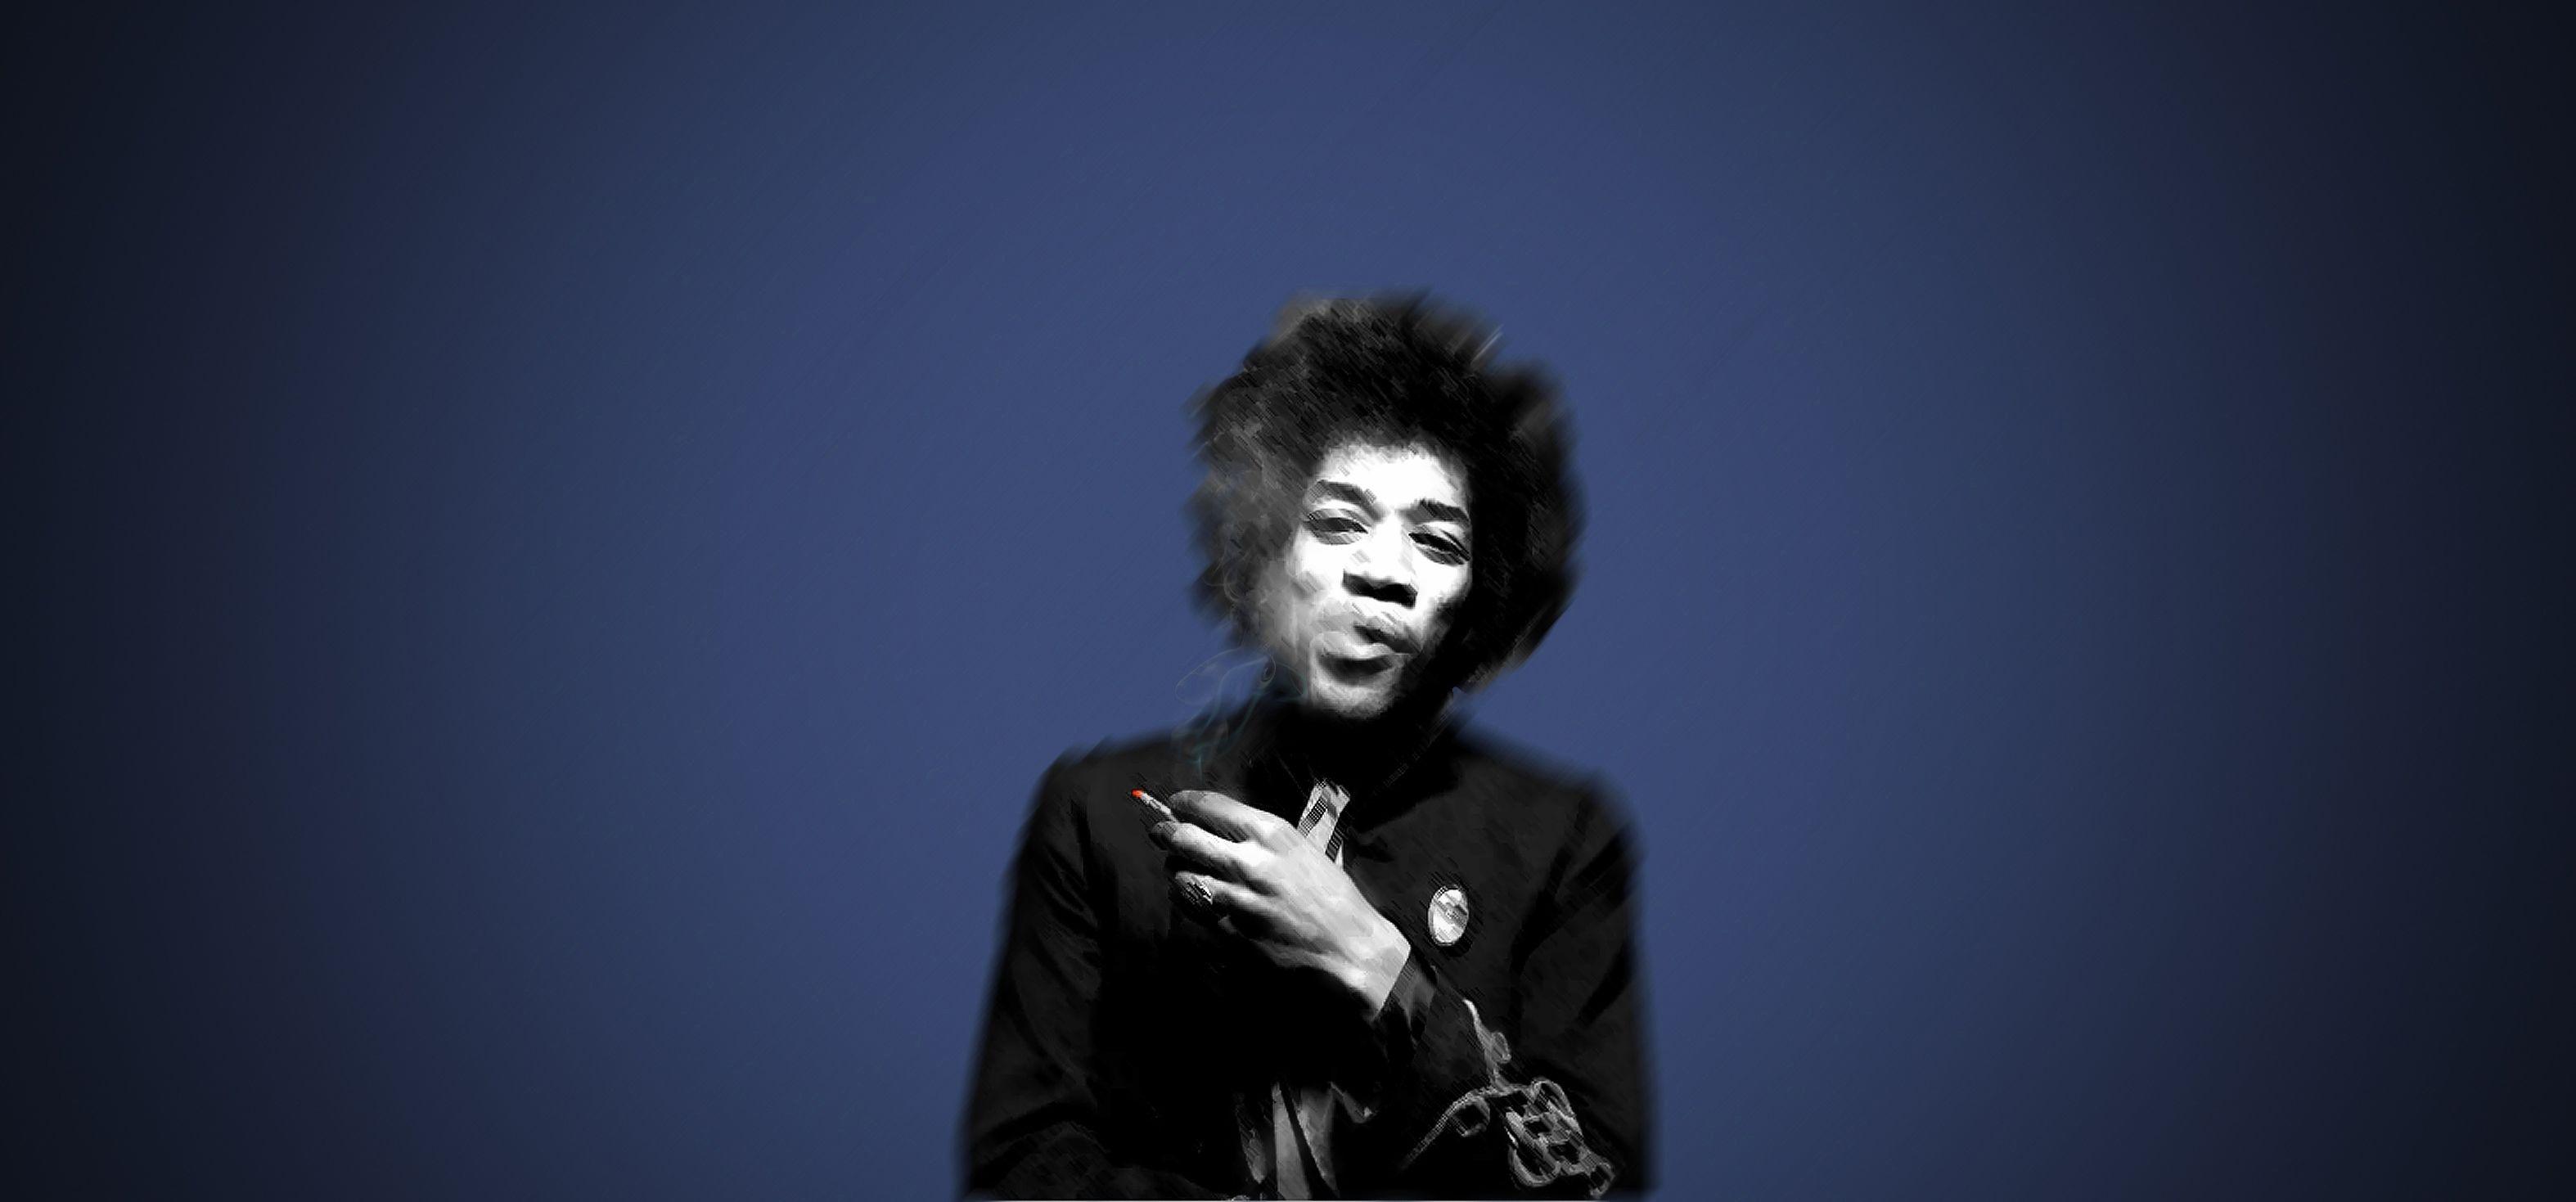 48 Jimi Hendrix iPhone Wallpaper  WallpaperSafari